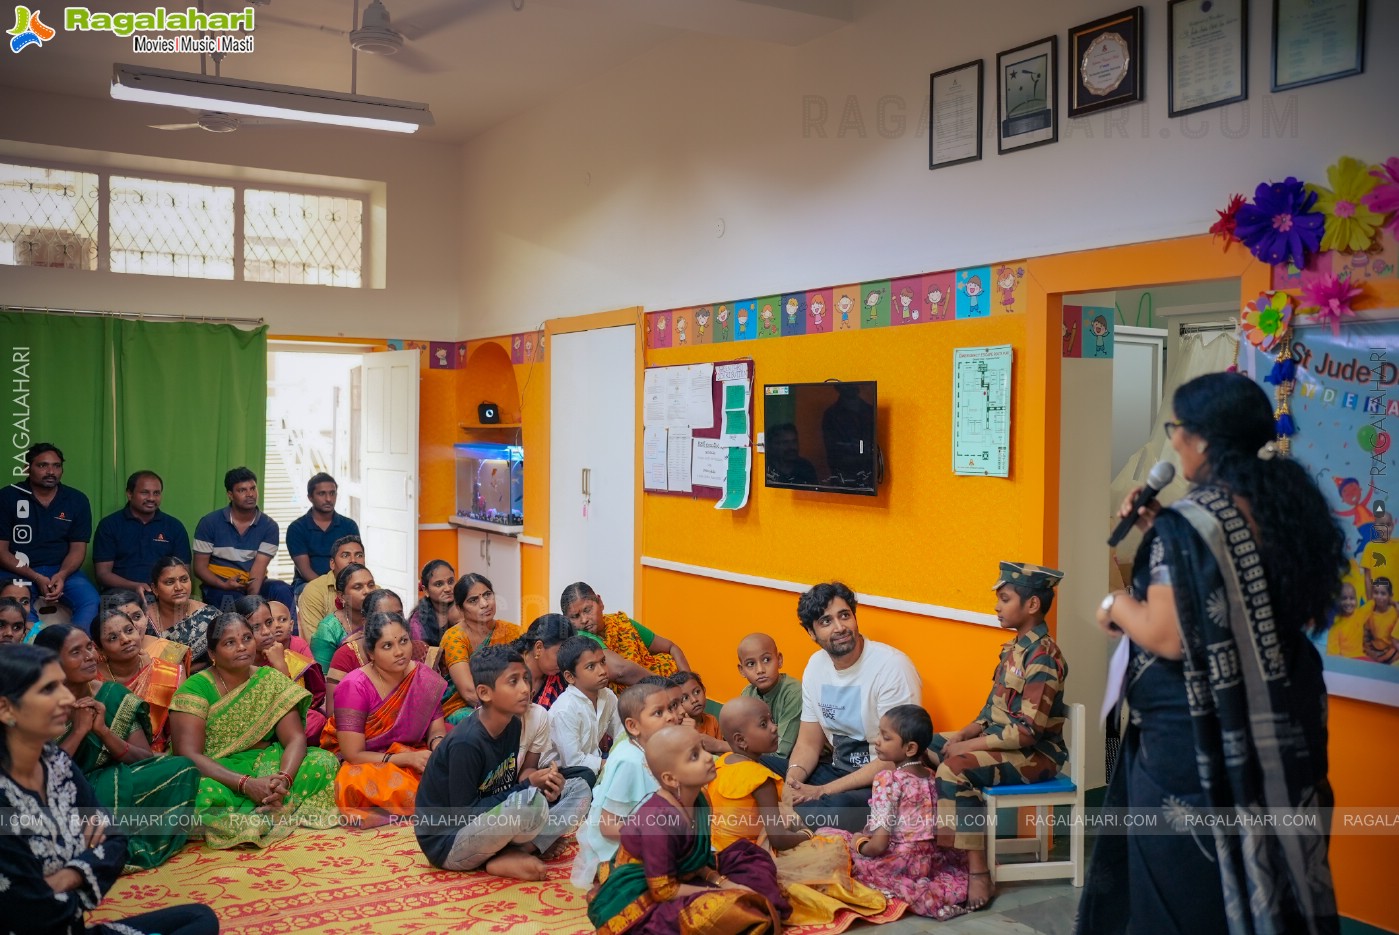 Adivi Sesh spent time with Cancer battling children at St Jude Child Care